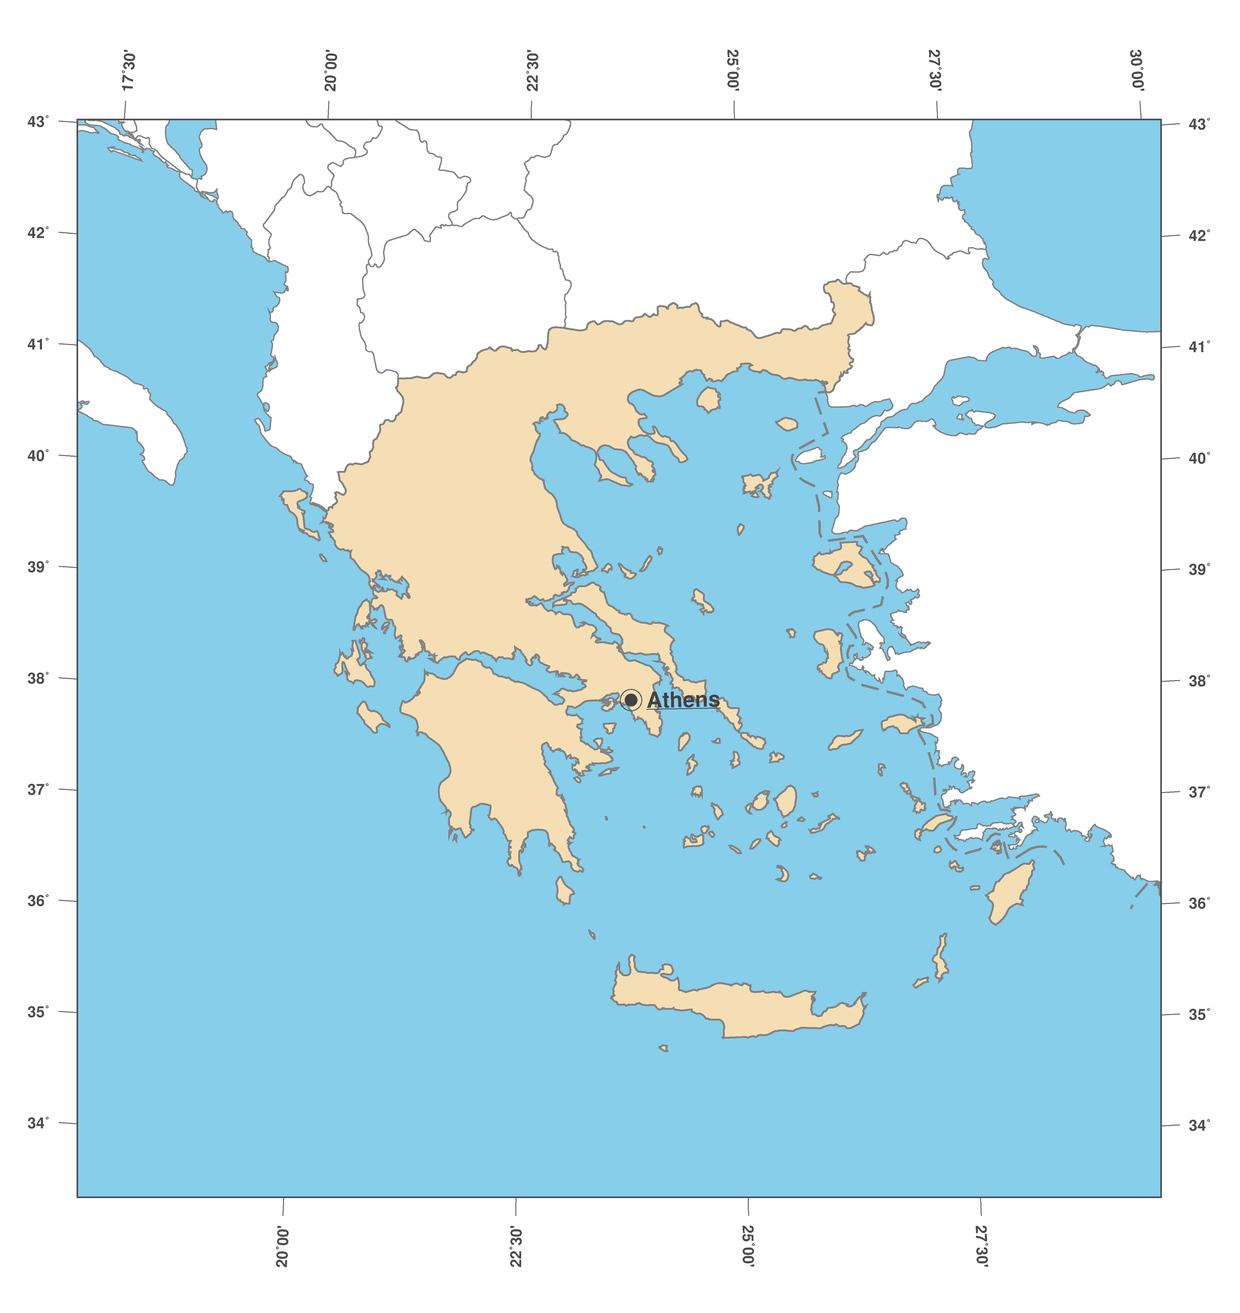 Greece capital of The capital